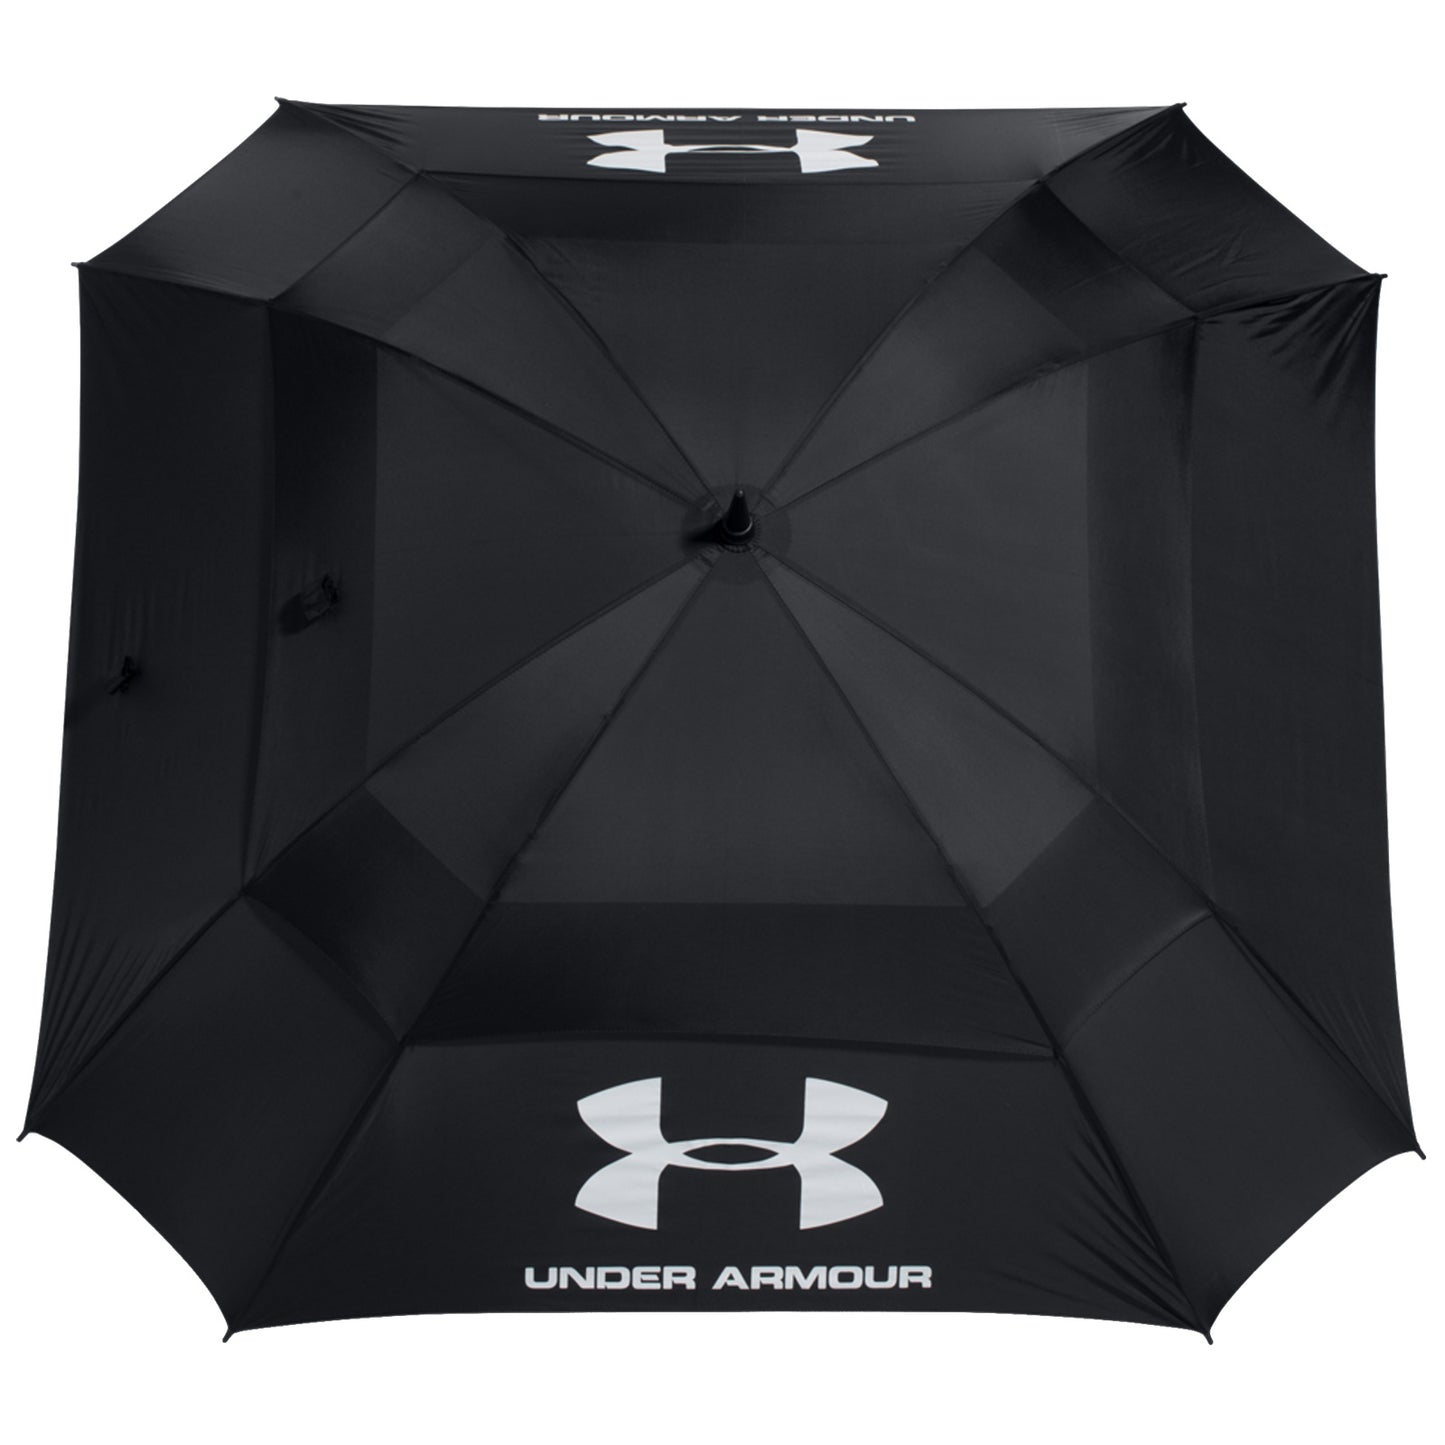 Under Armour 68" Double Canopy Umbrella